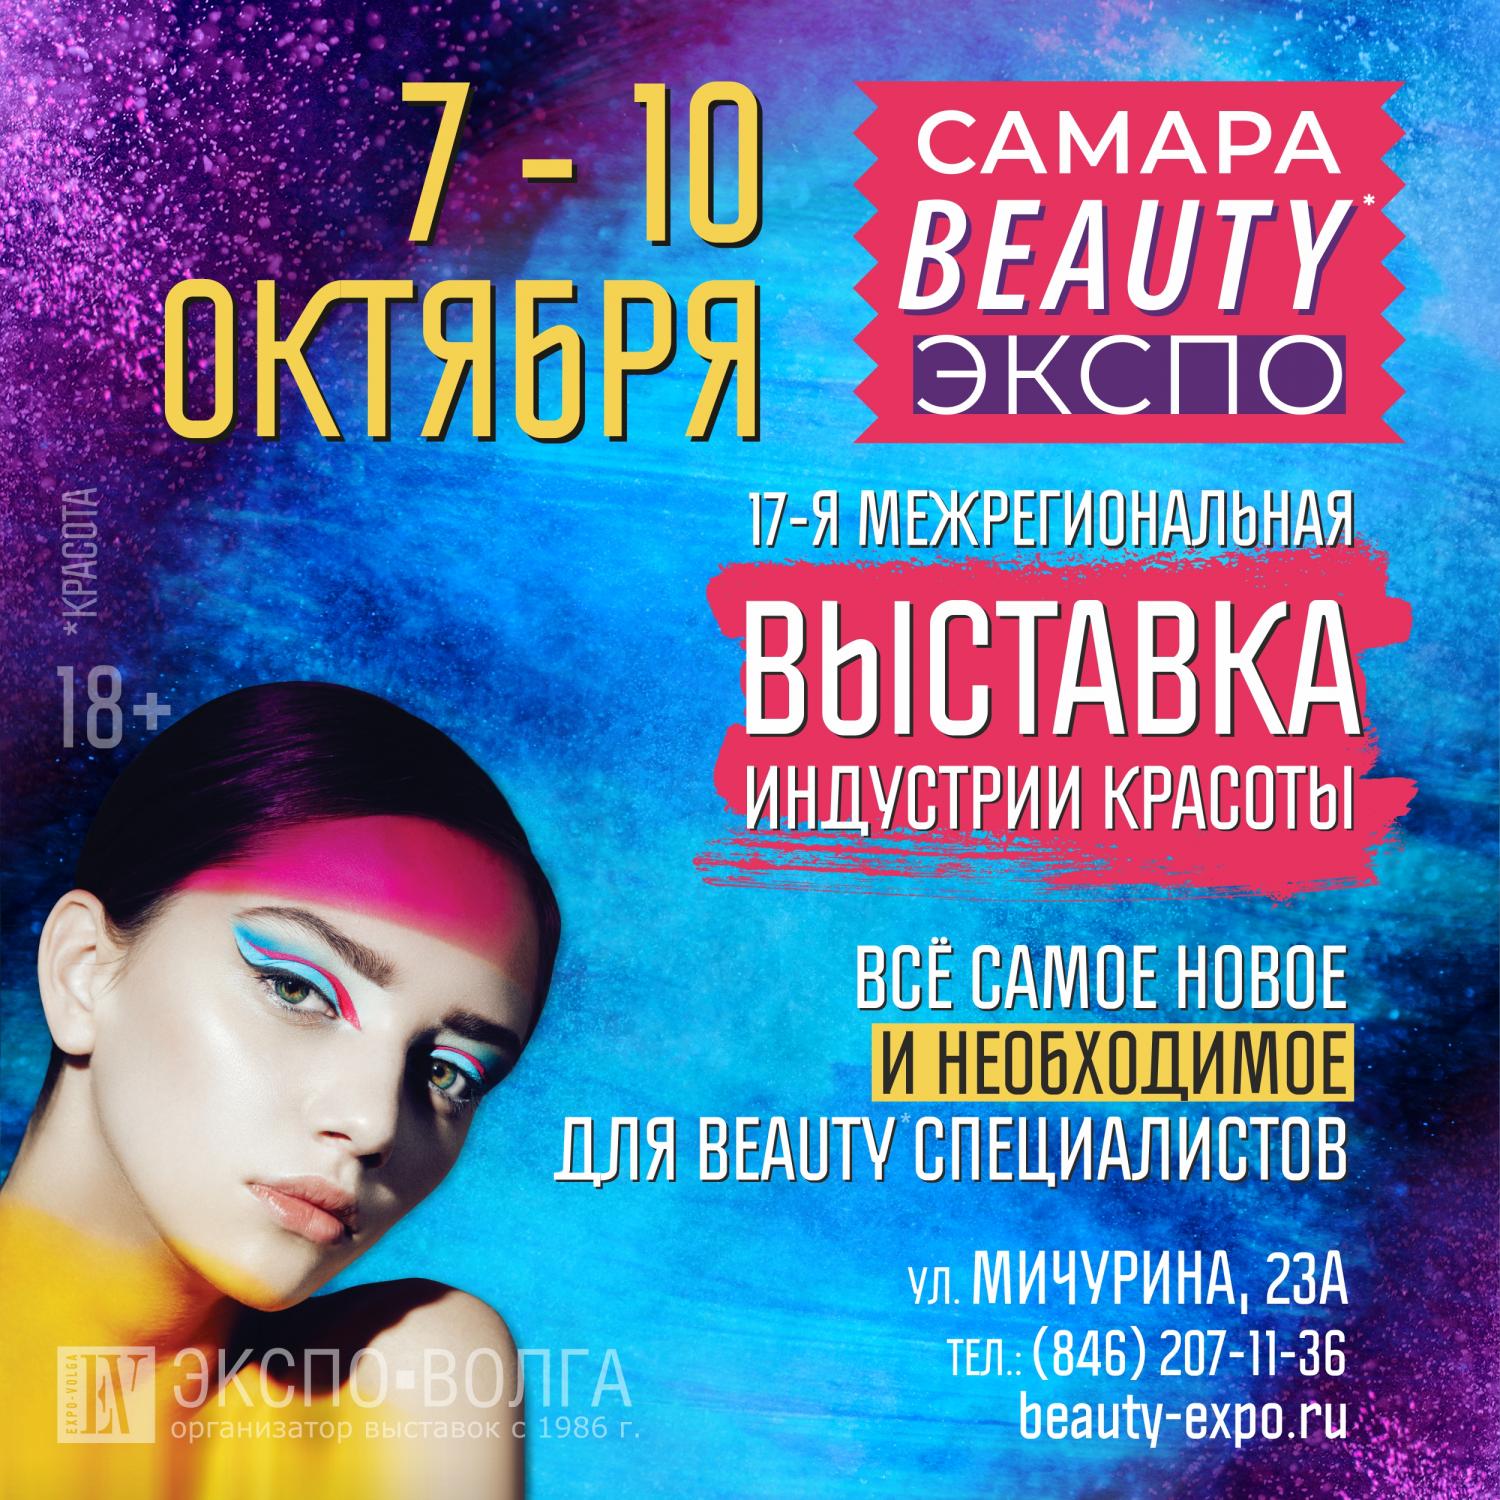 7-10  октября - Выставка "Самара Beauty Expo"